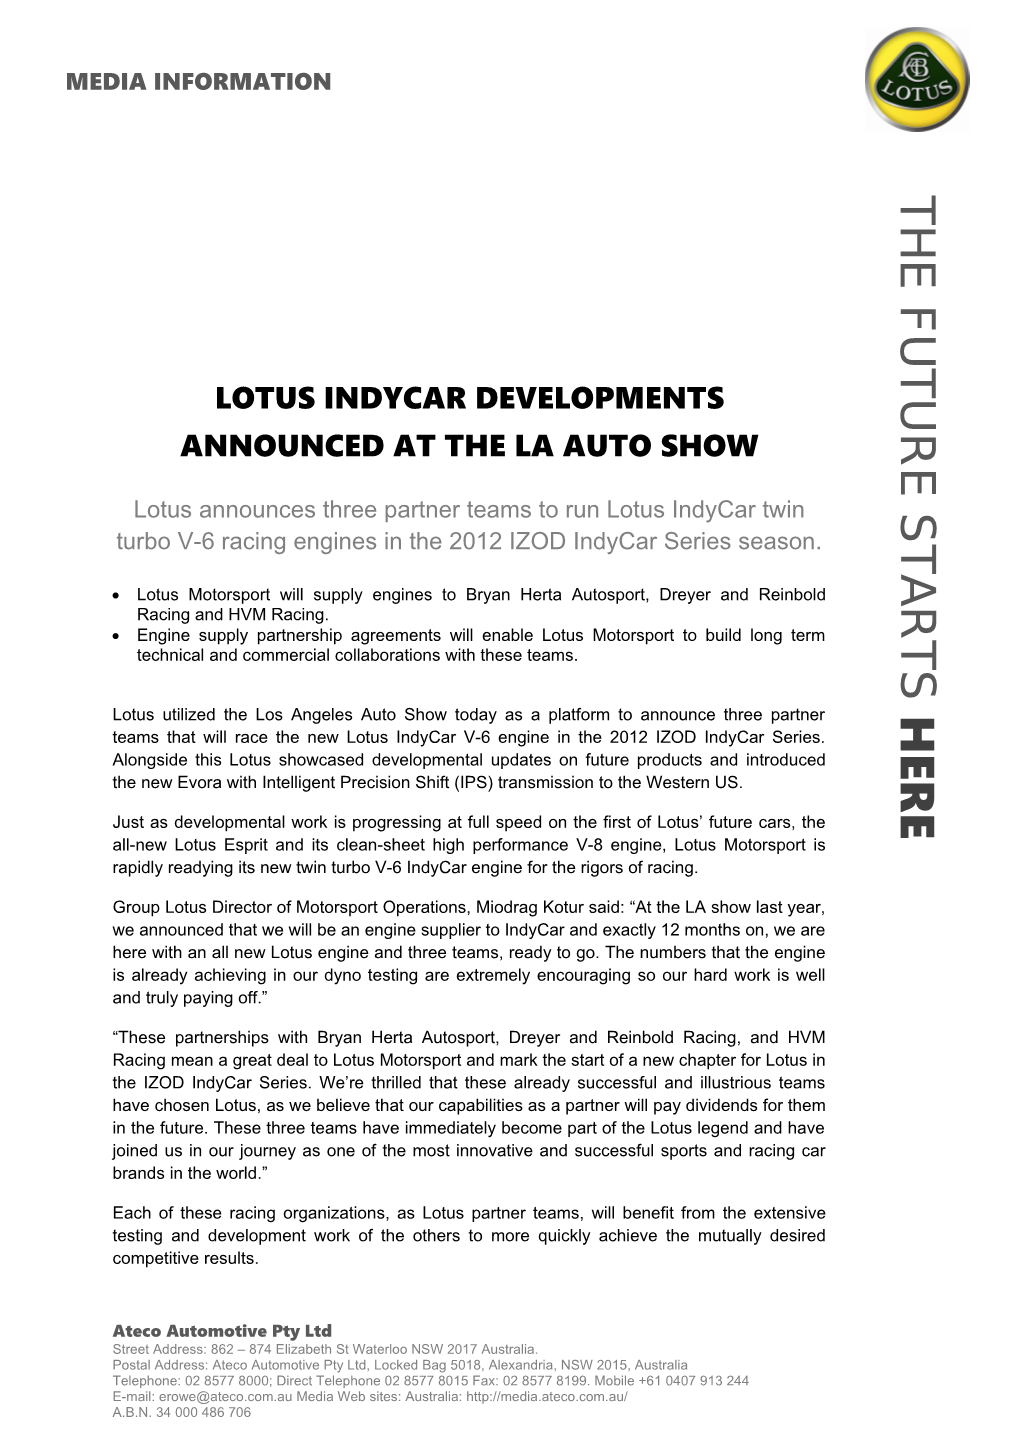 Lotus Indycar Developments Announced at the LA Auto Show